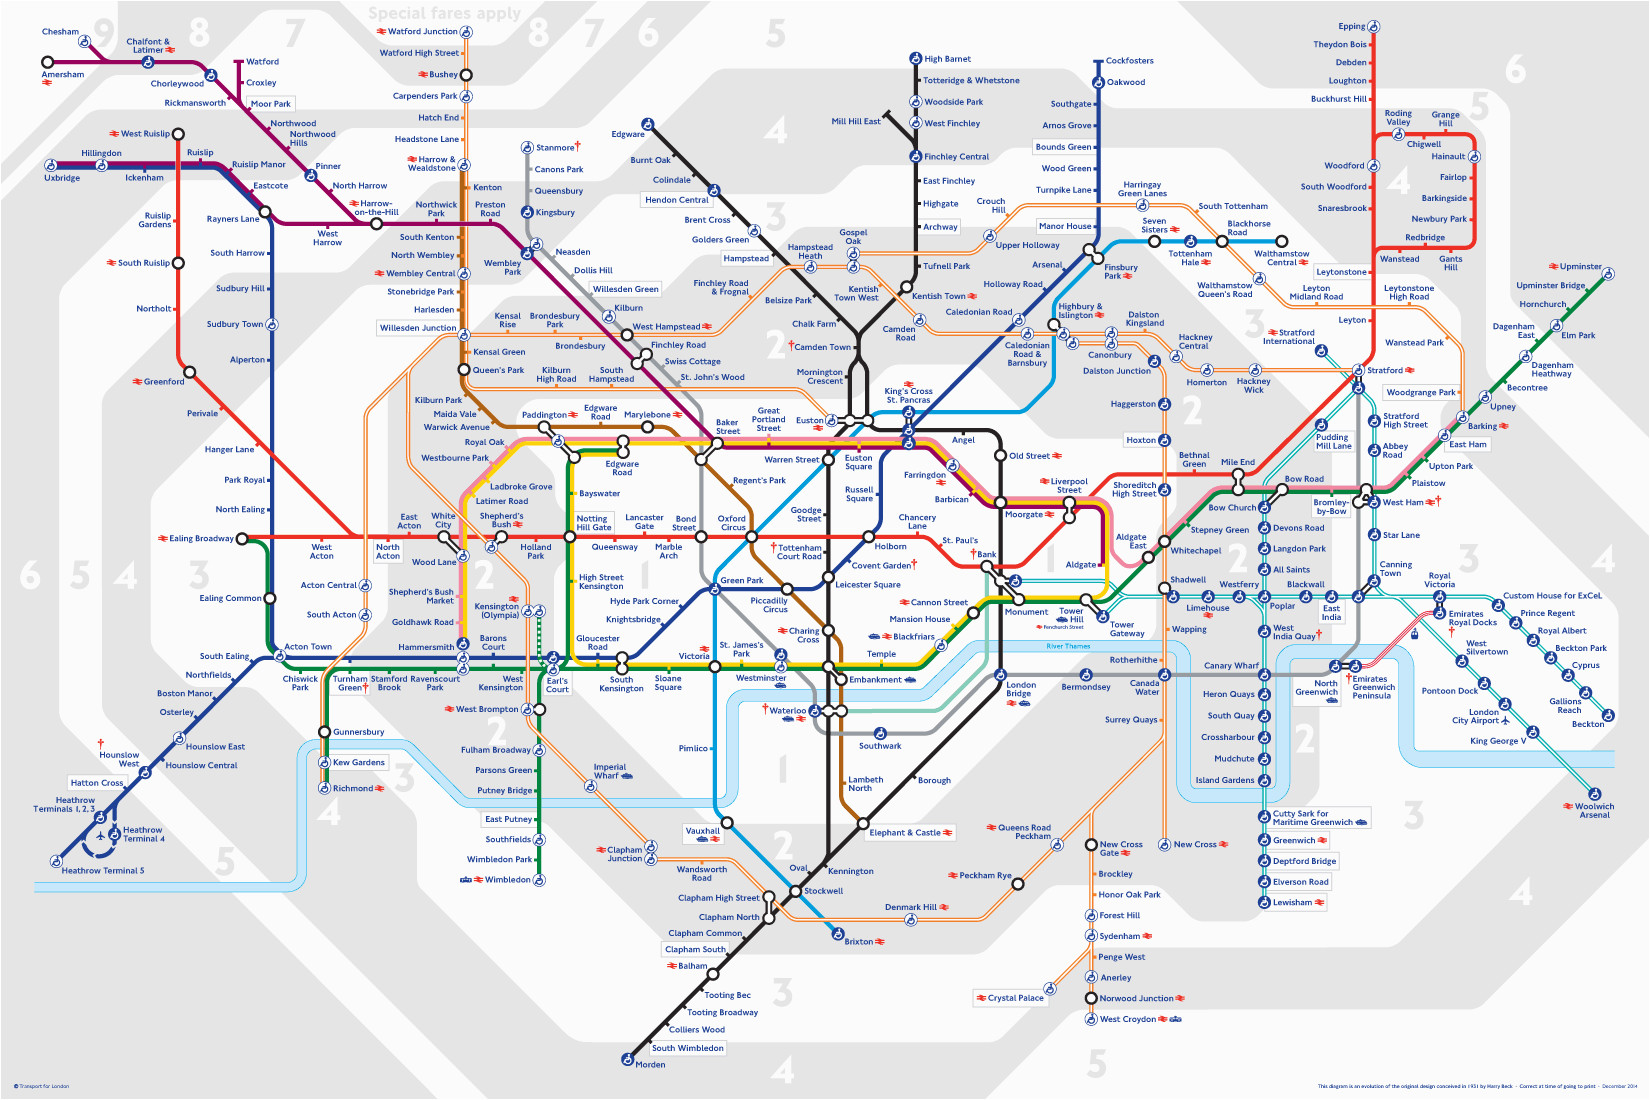 London England Underground Map Tube Map Transport for London